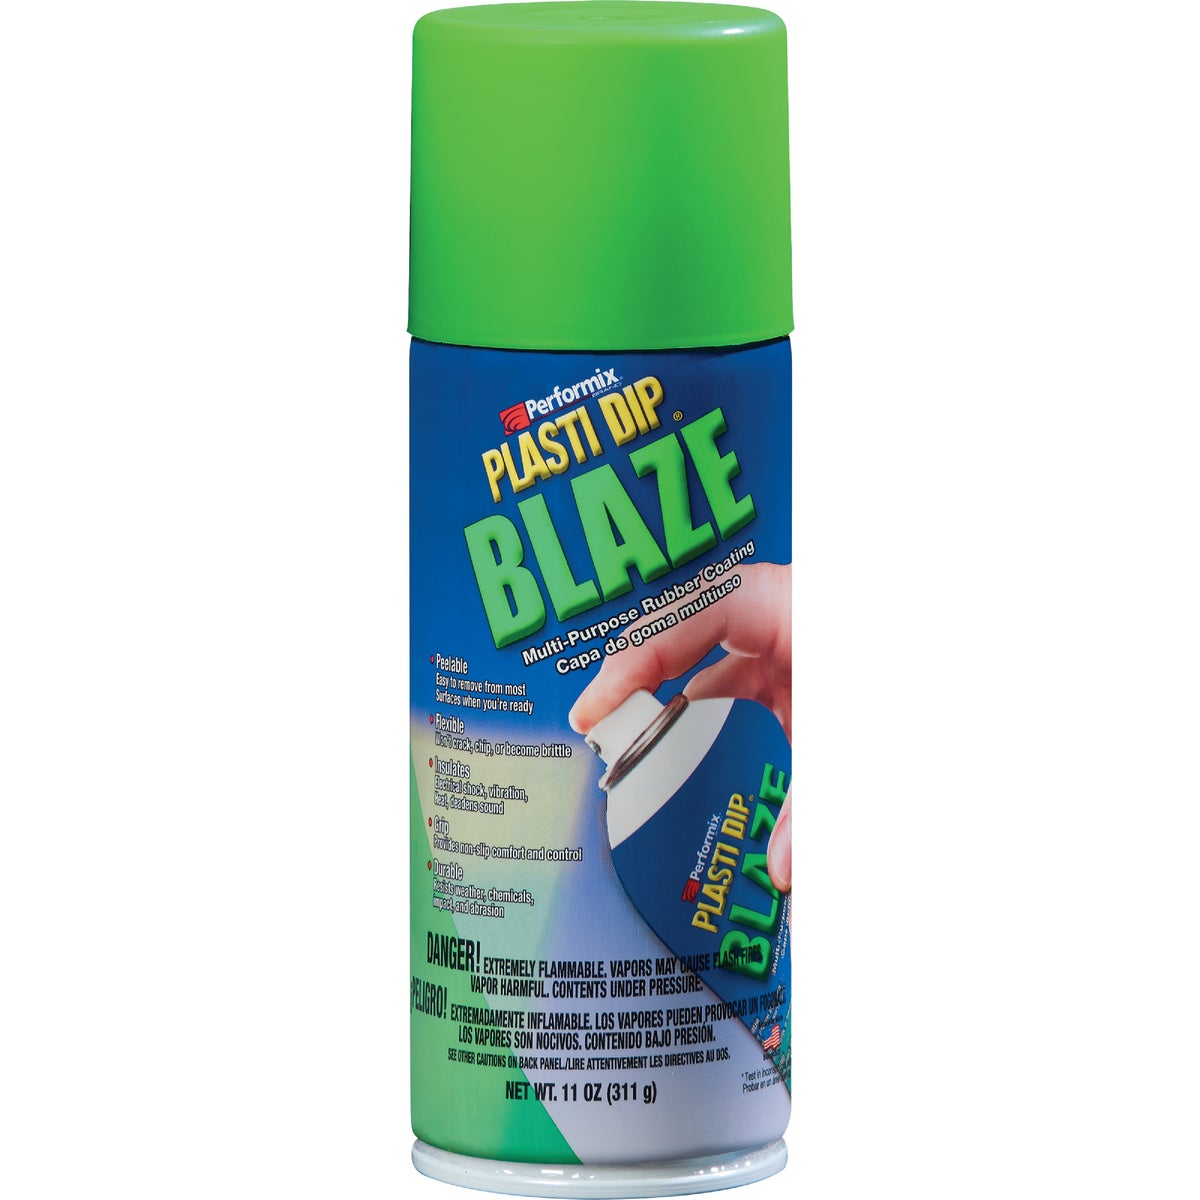 Performix Plasti Dip Green Blaze Rubber Coating Spray Paint